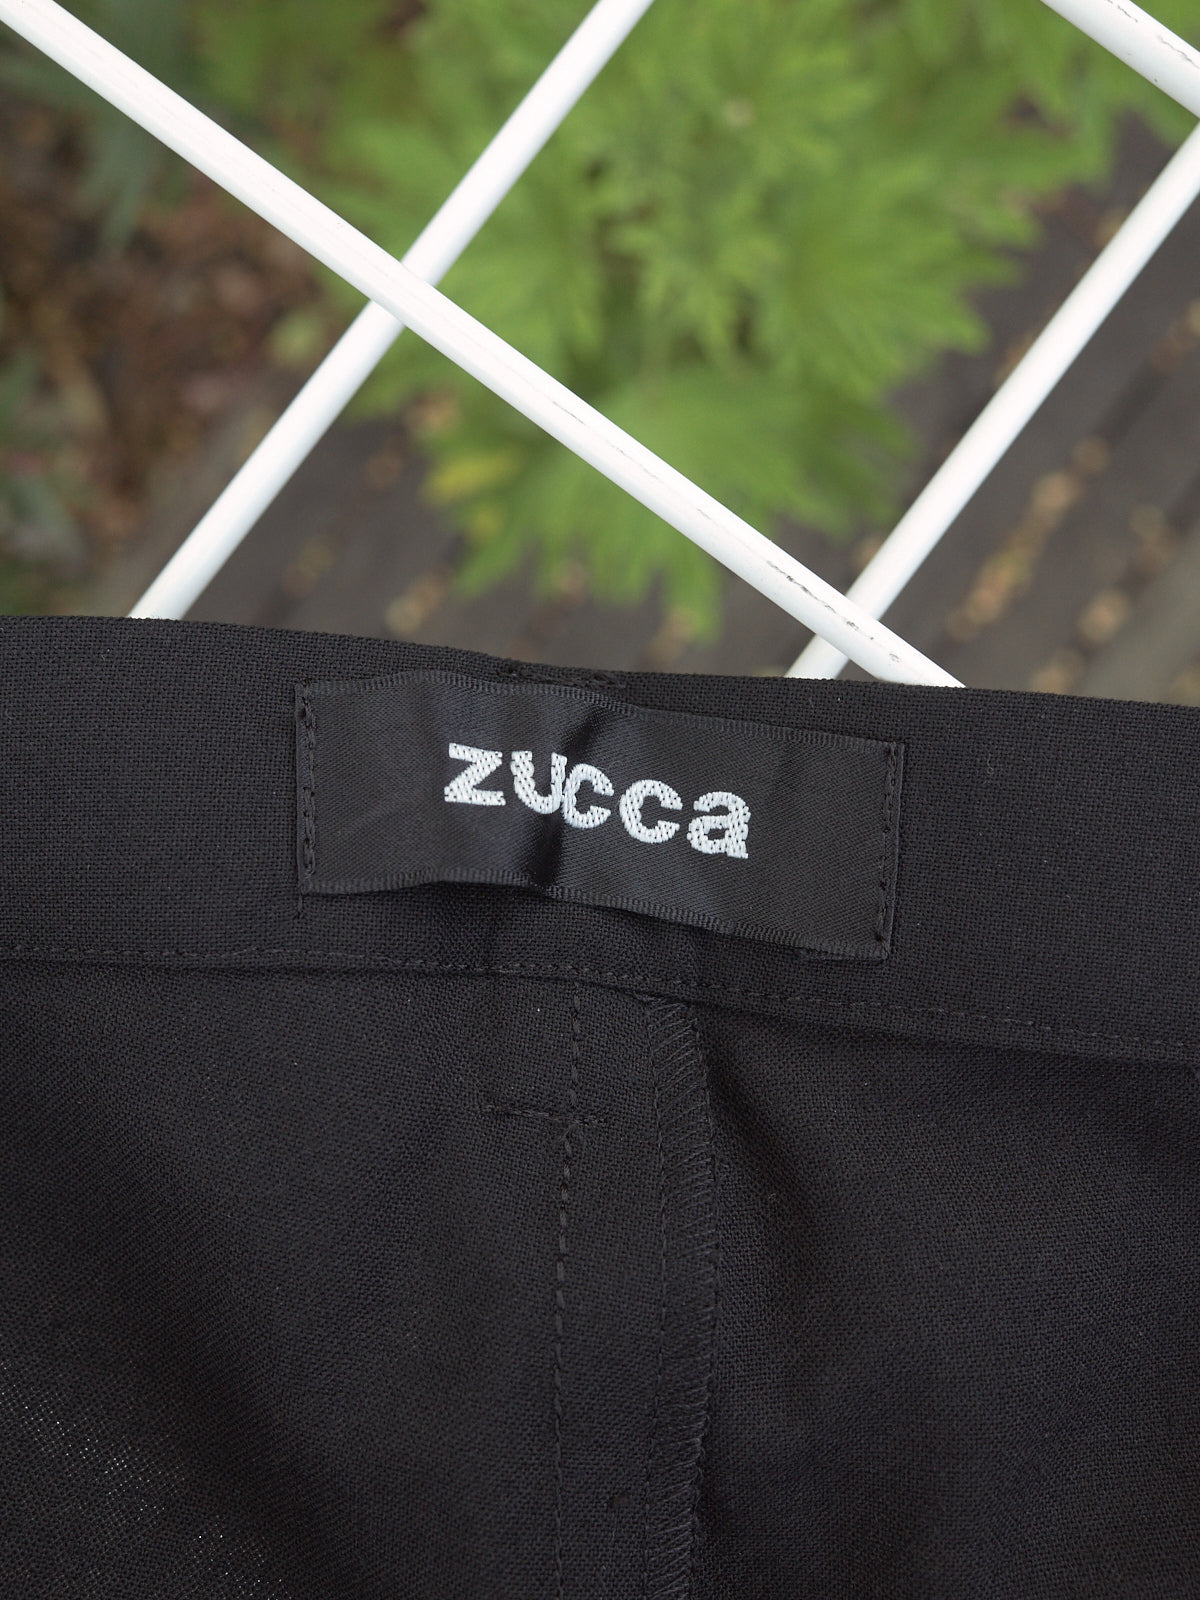 Zucca black wool blend (very) cropped pants - womens M S